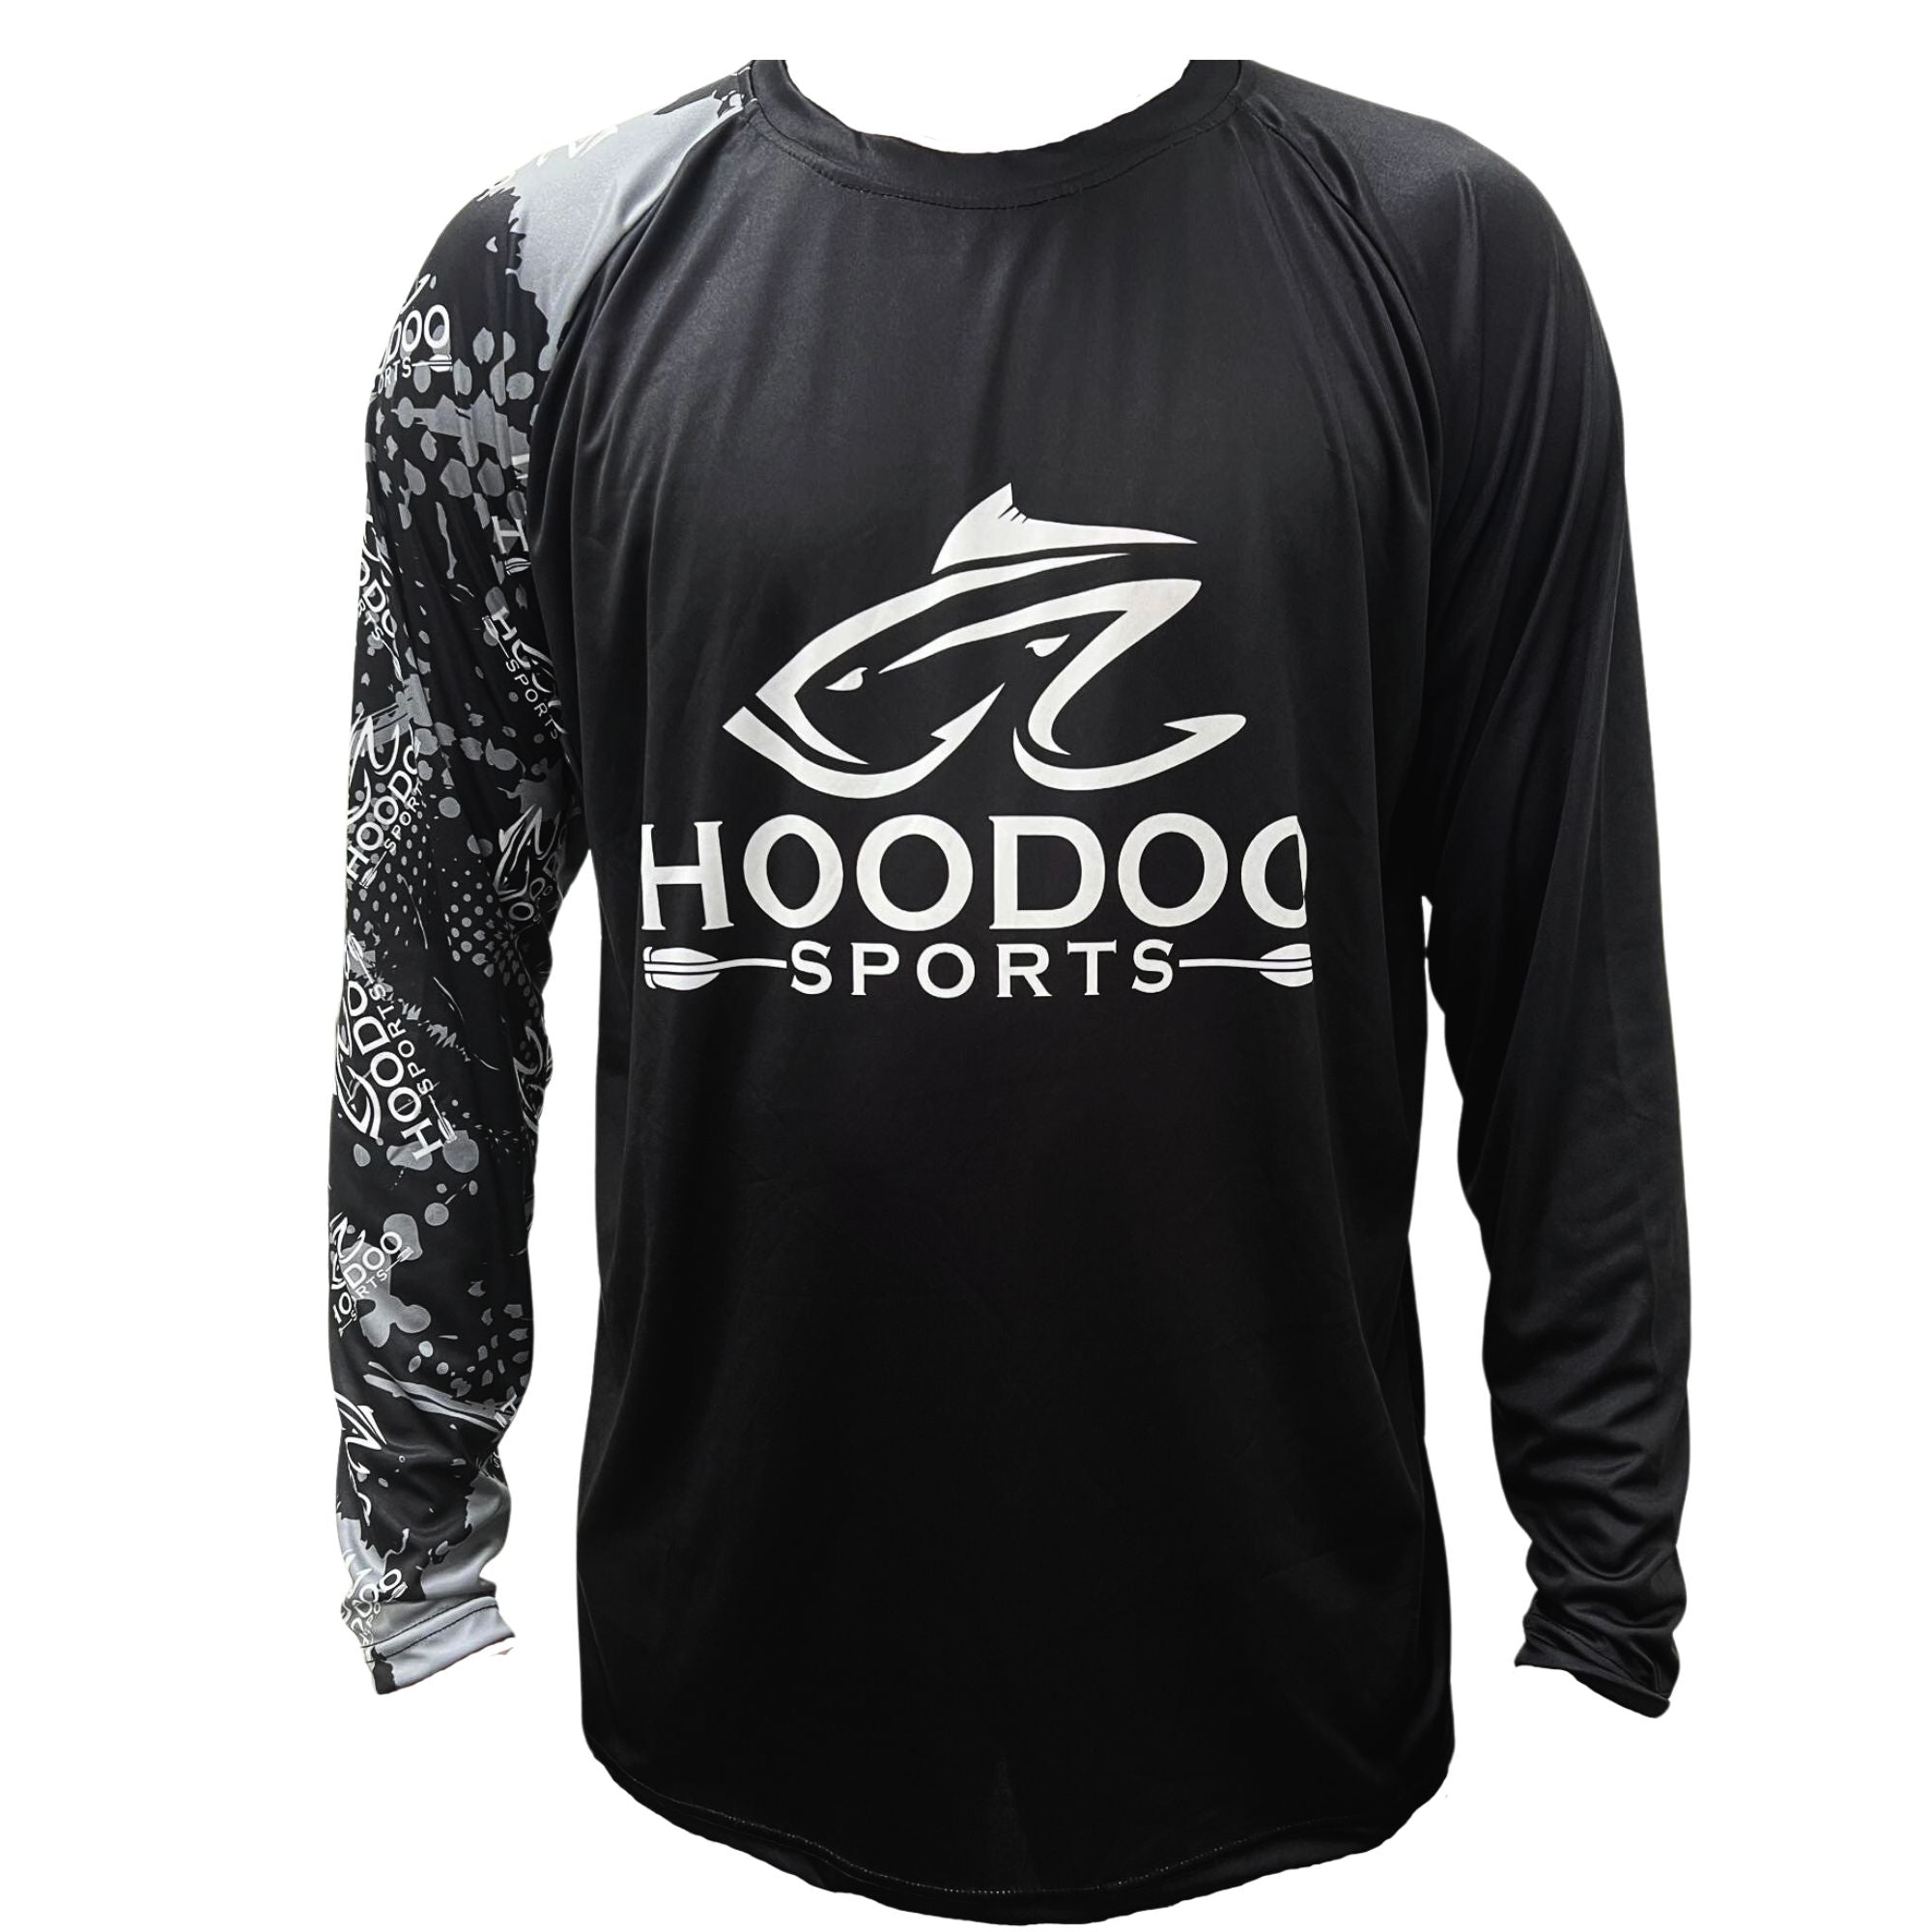 Hoodoo Sun-Tek UV Protection Long Sleeve Fishing Shirt